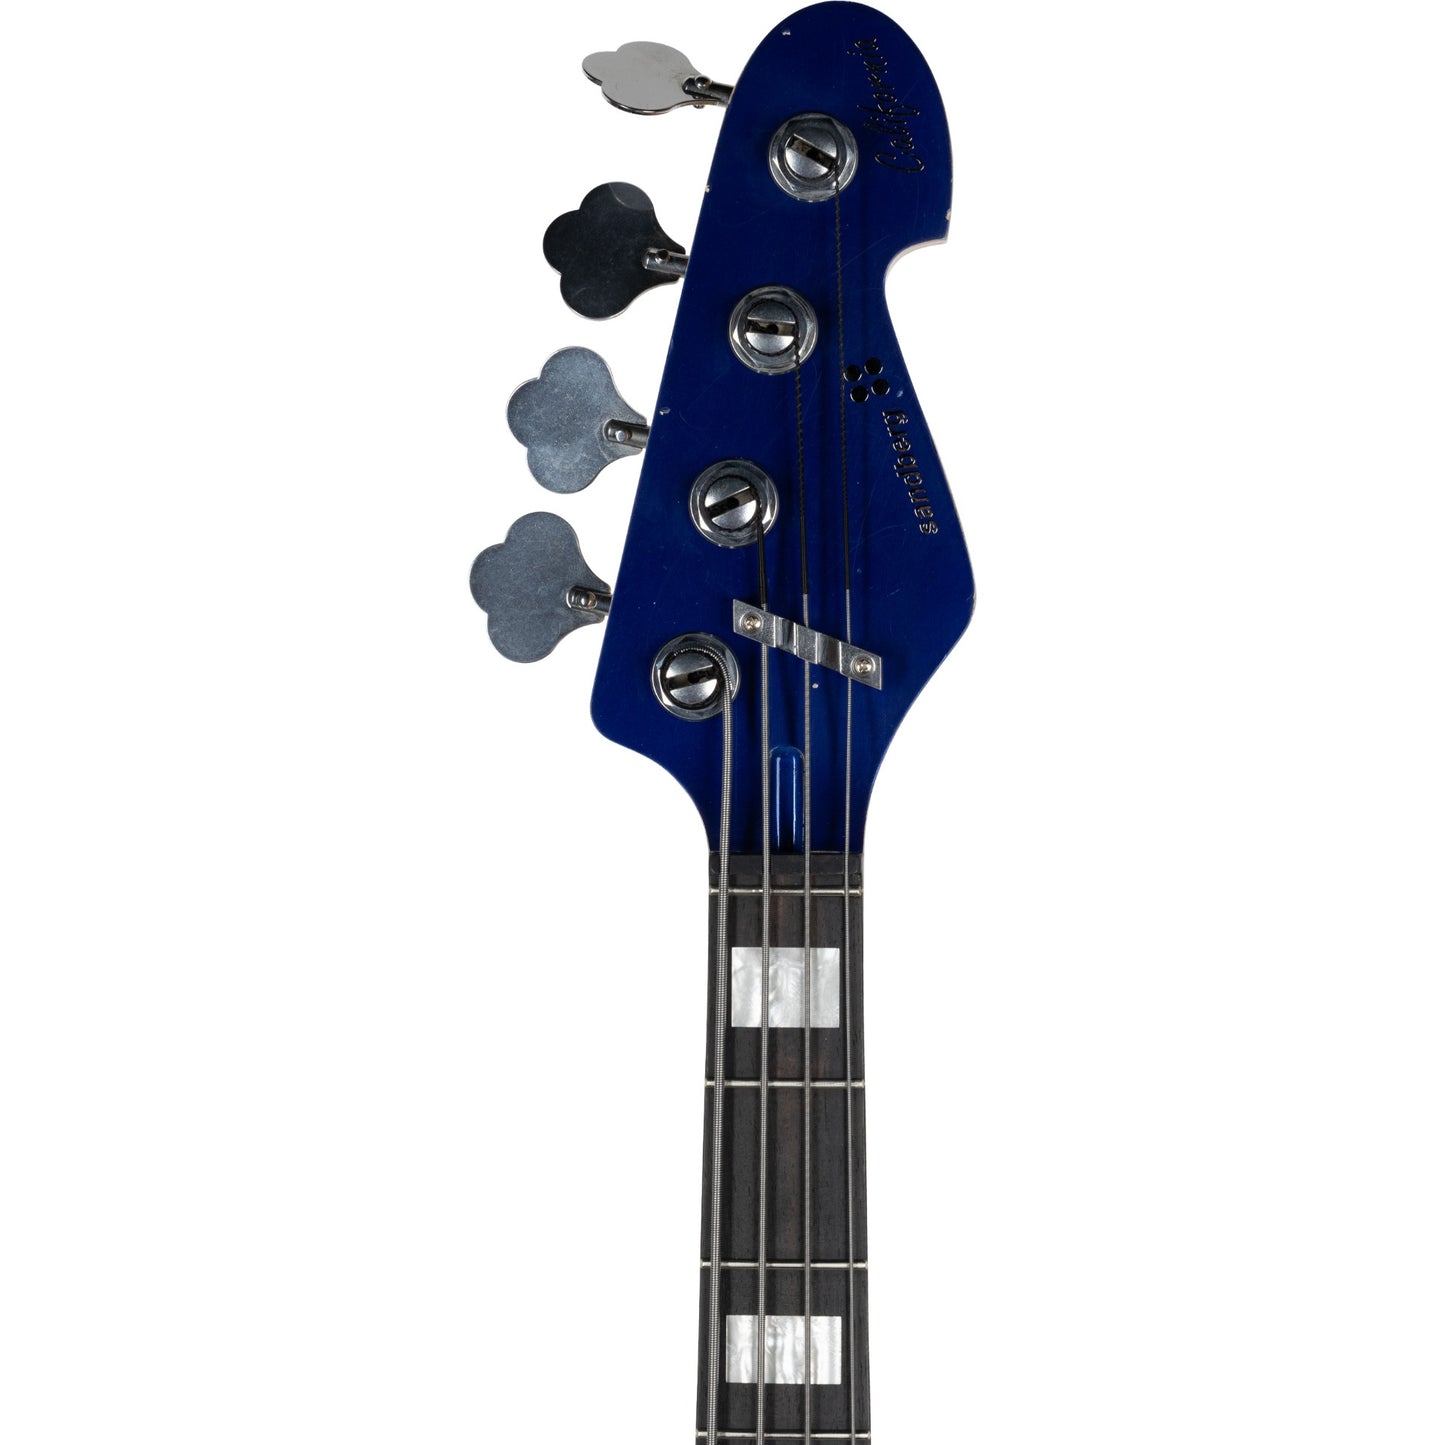 Sandberg California TT 4-String Bass Guitar - Soft Aged San Remo Blue